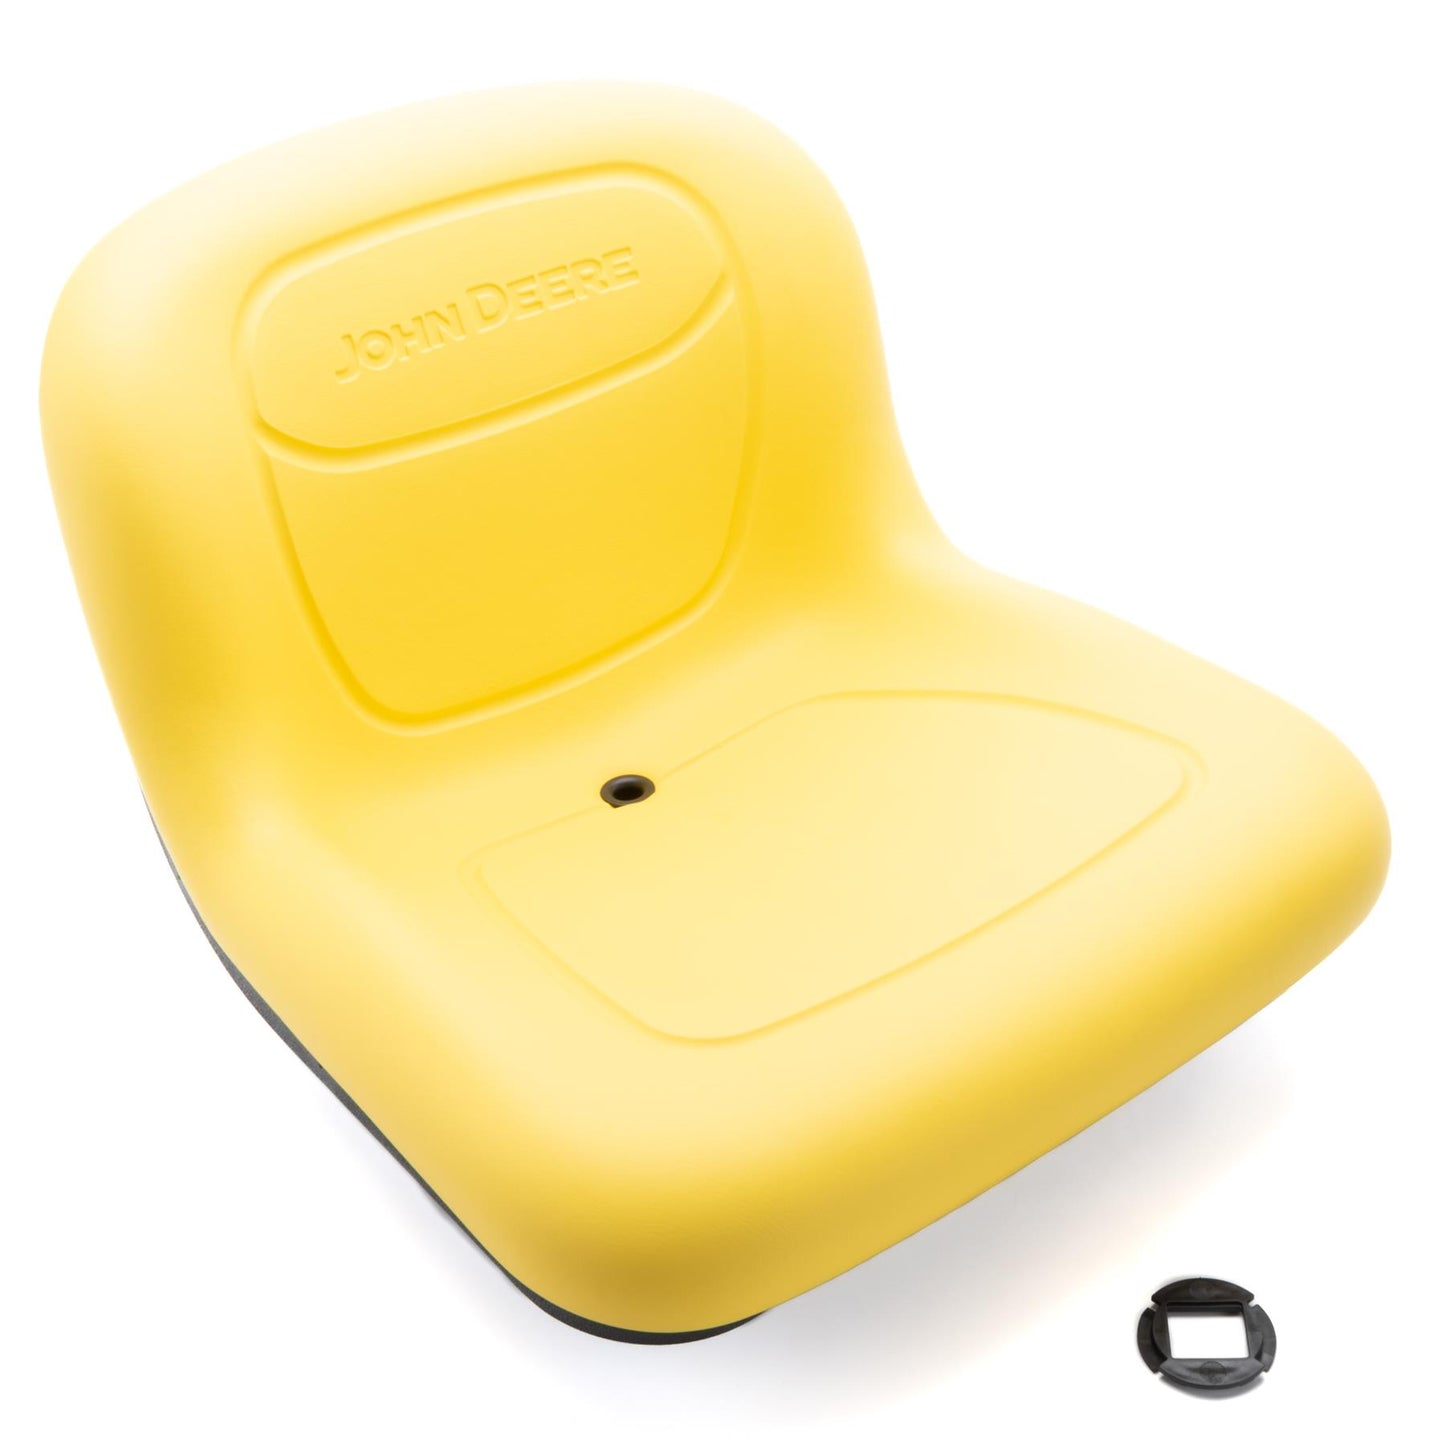 John Deere Seat and Adapter Kit - AM132775 M149778